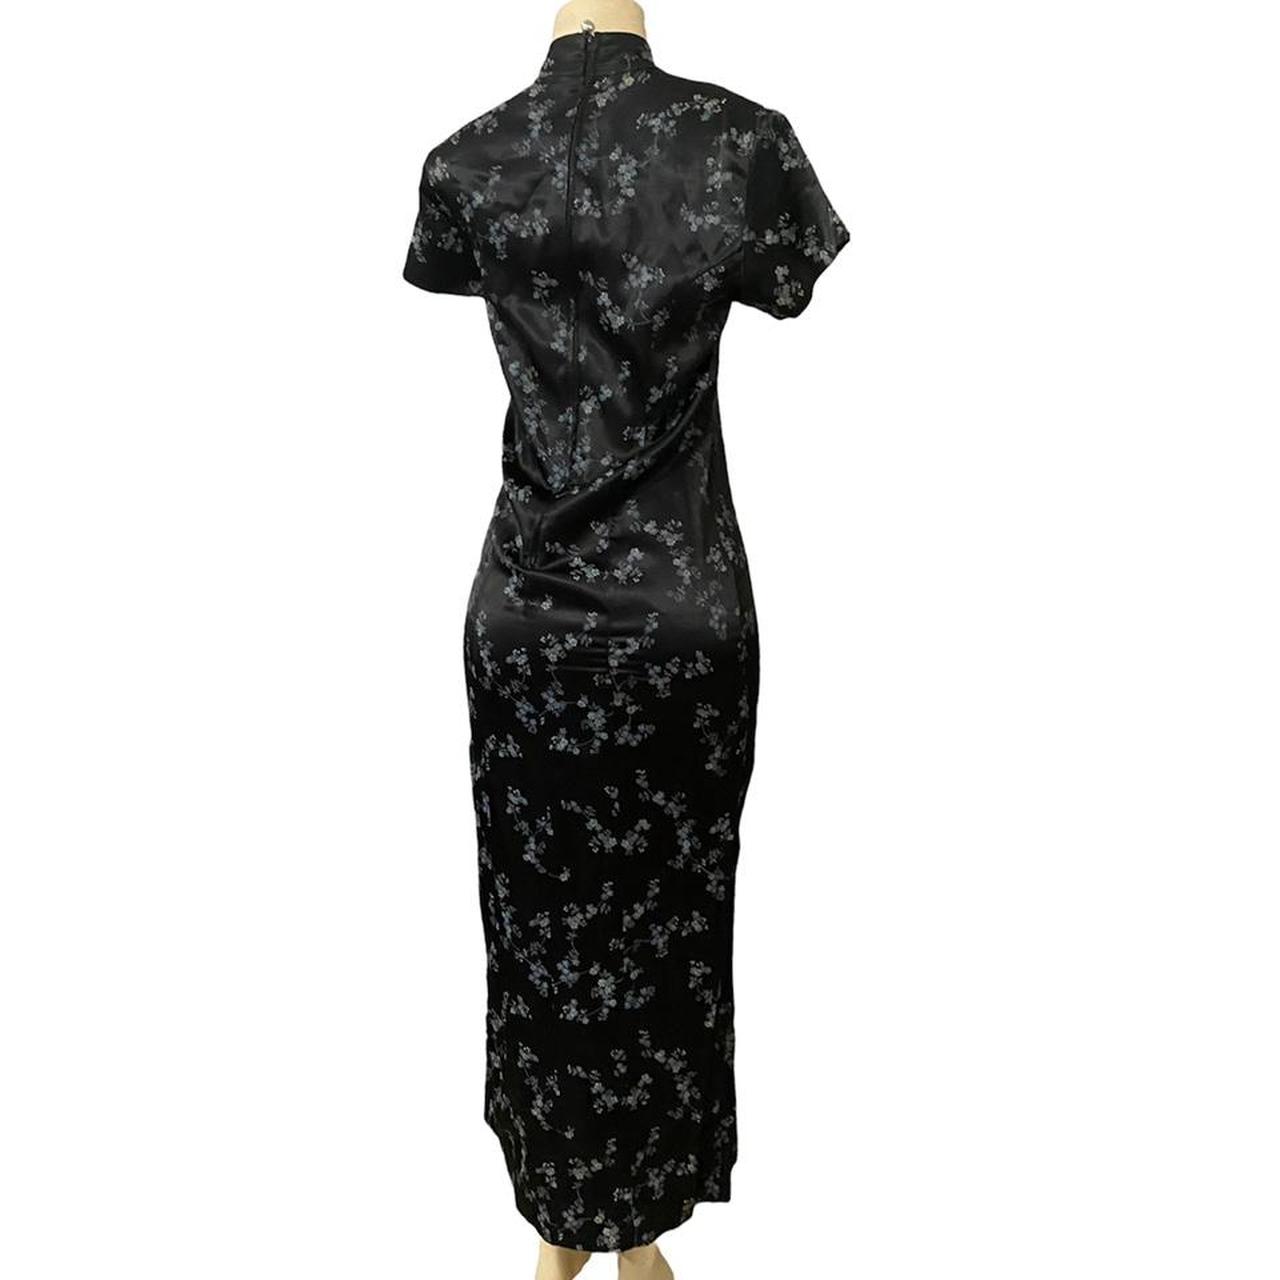 PANDORA Women's Black and Blue Dress (2)